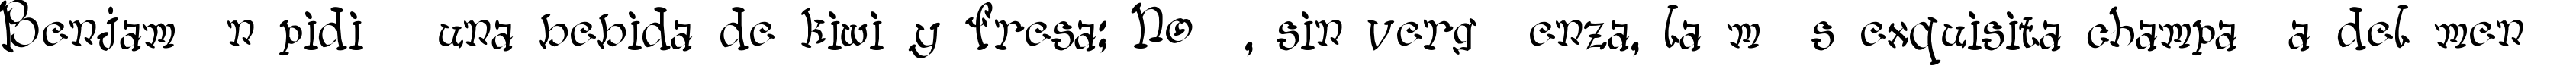 Пример написания шрифтом Wacko текста на испанском